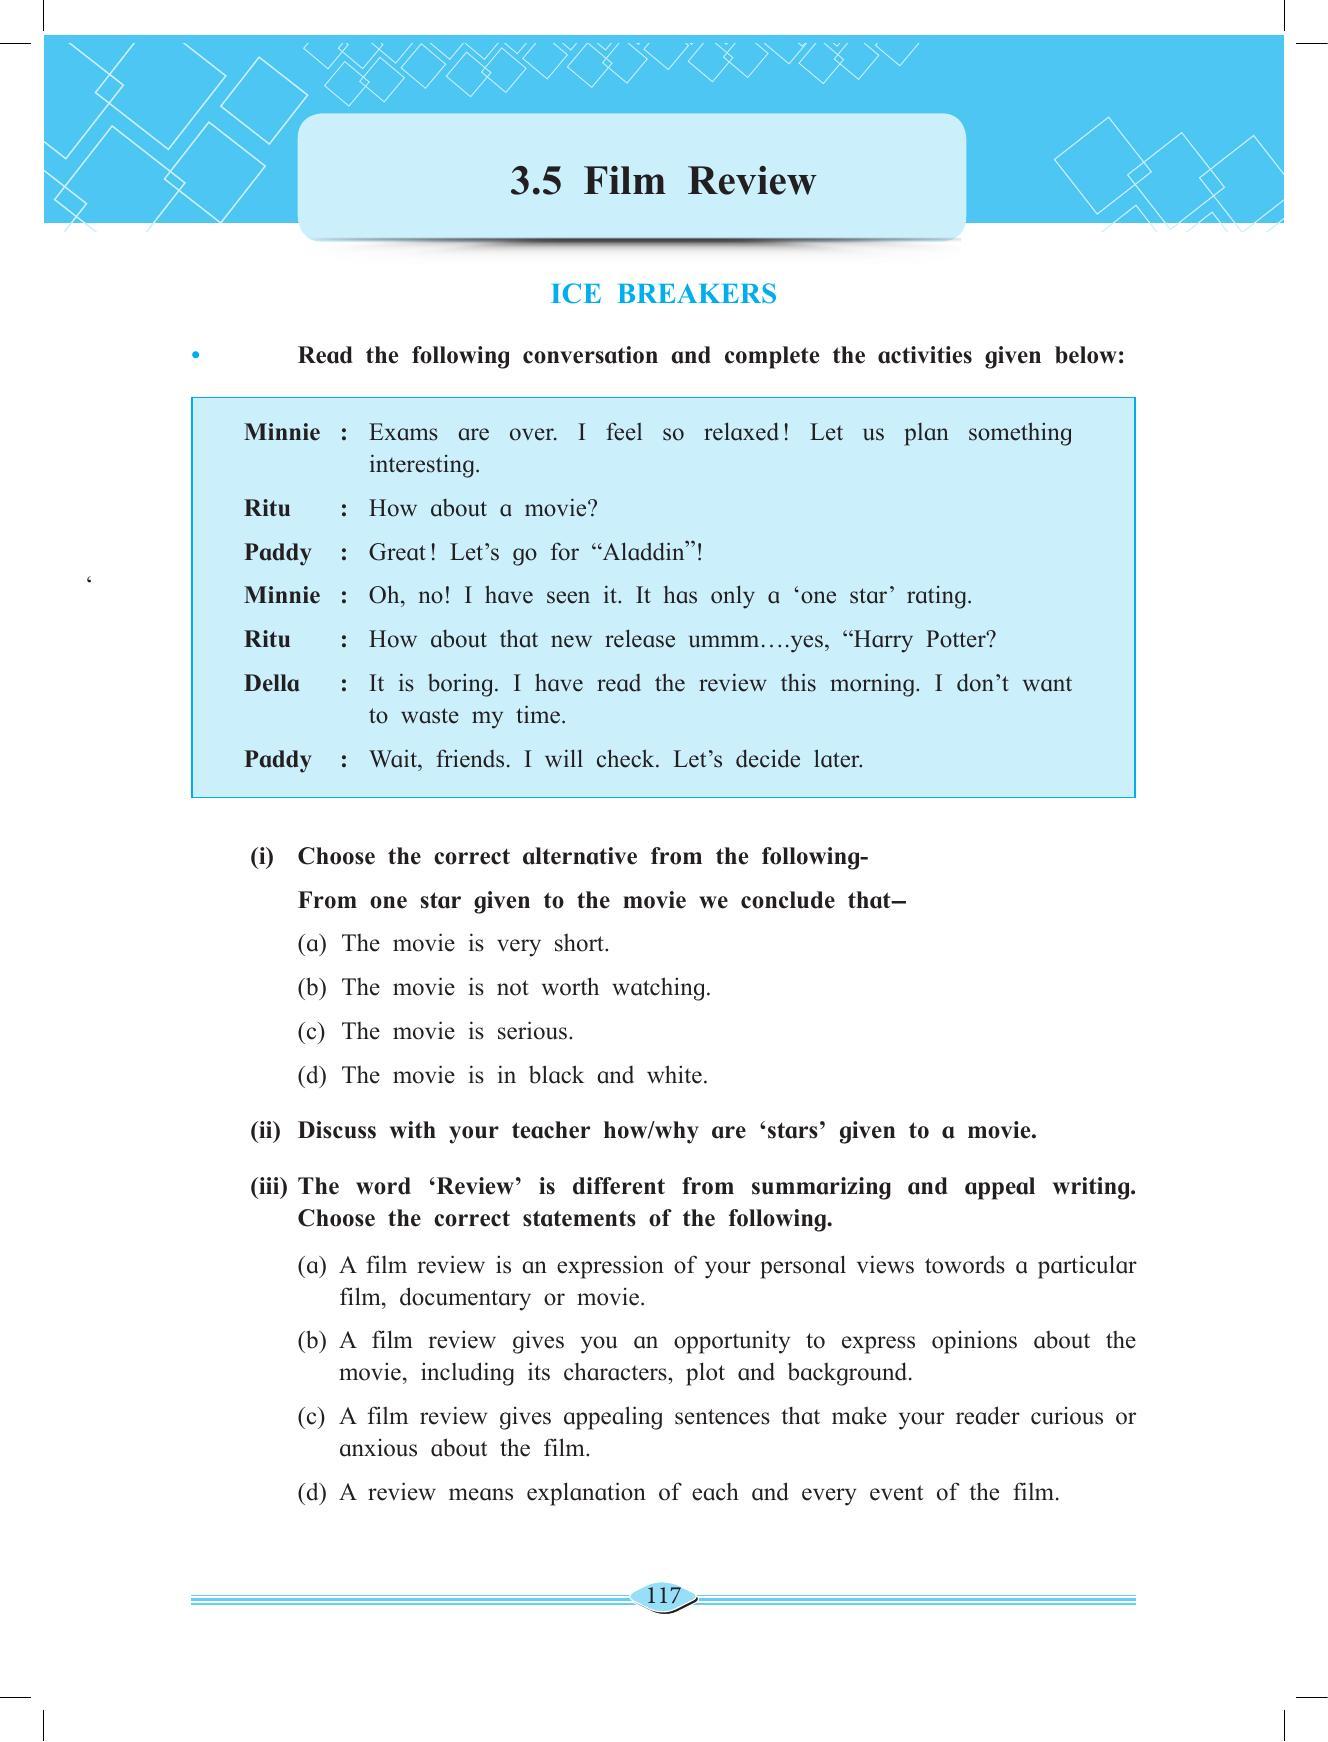 Maharashtra Board Class 11 English Textbook - Page 131